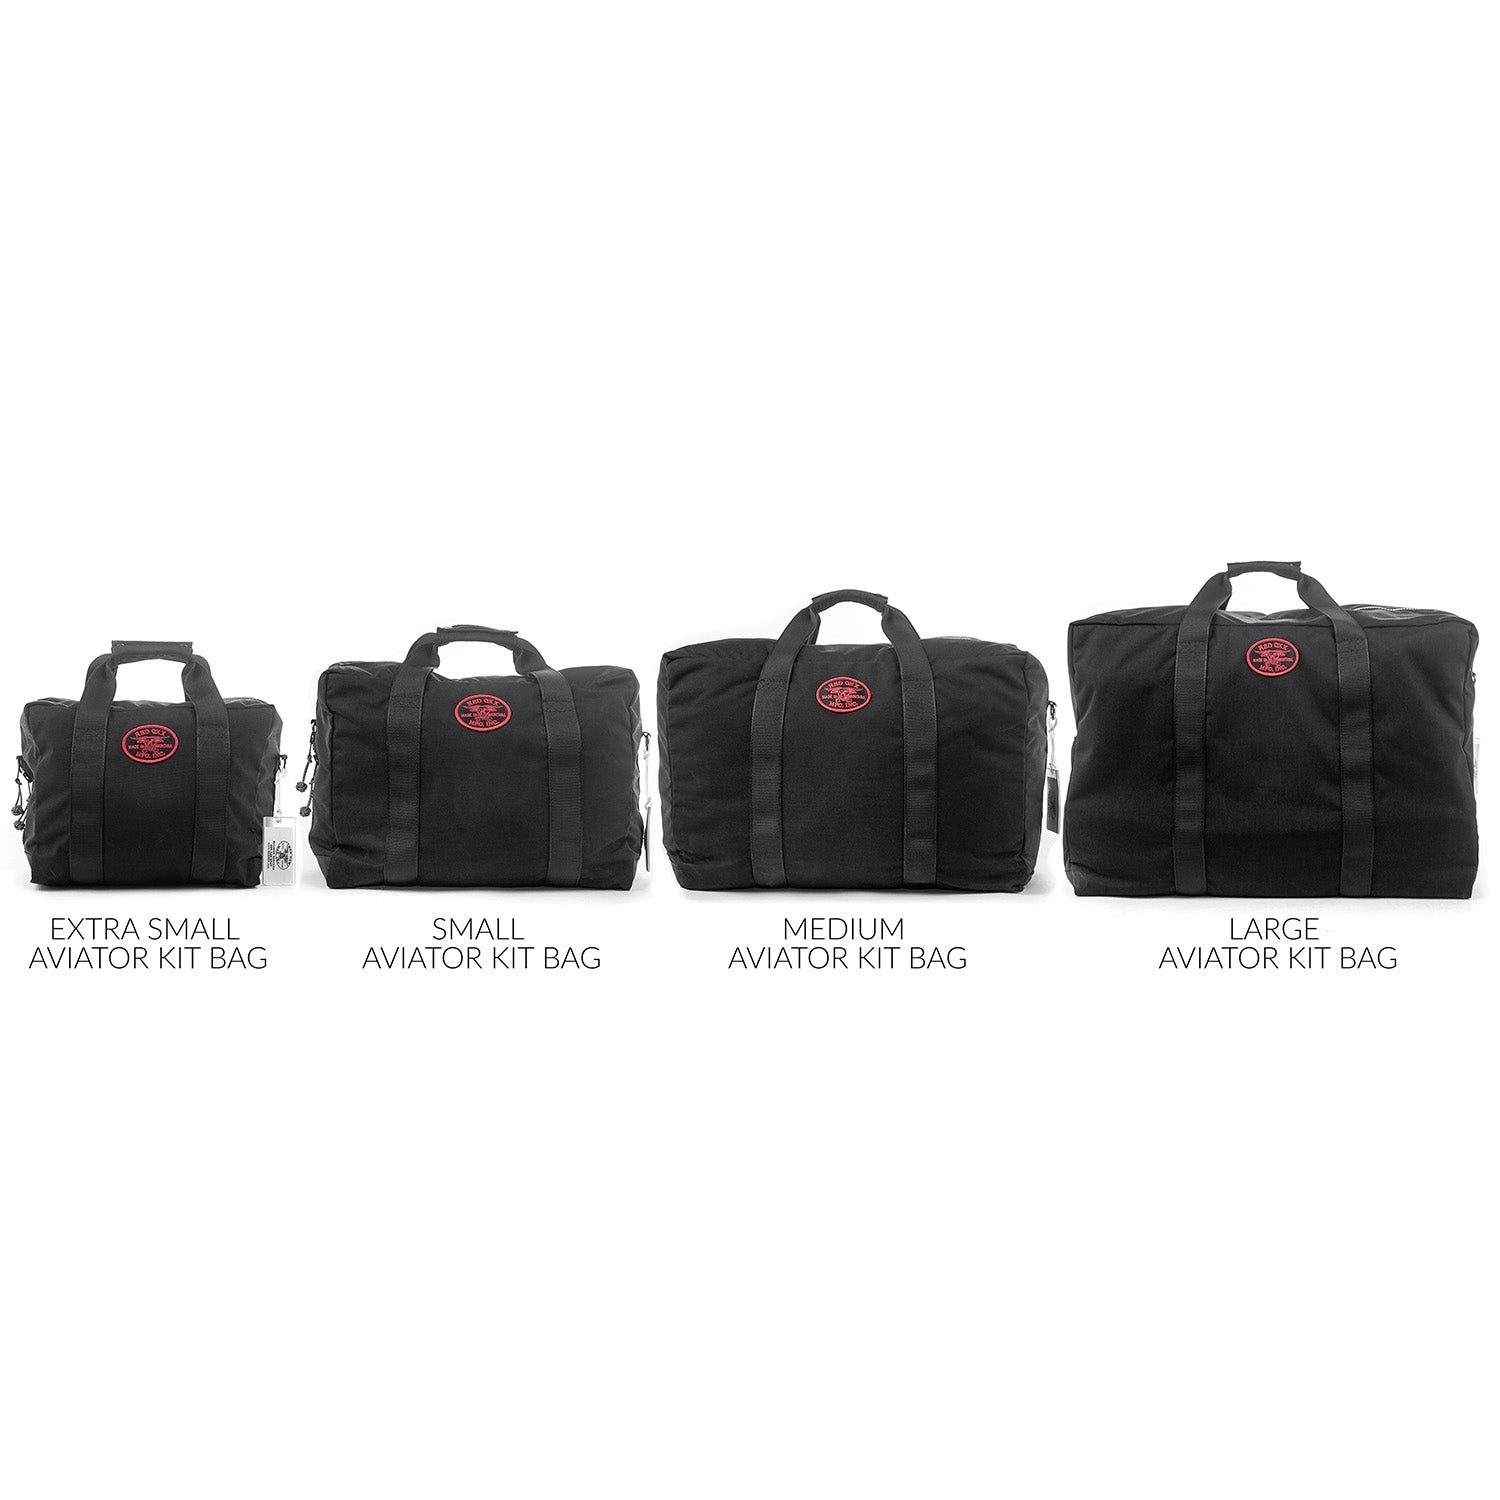 From Left to Right- Extra Small Aviator Kit Bag, Small Aviator Kit Bag, Medium Aviator Kit Bag , Large Aviator Kit Bag 